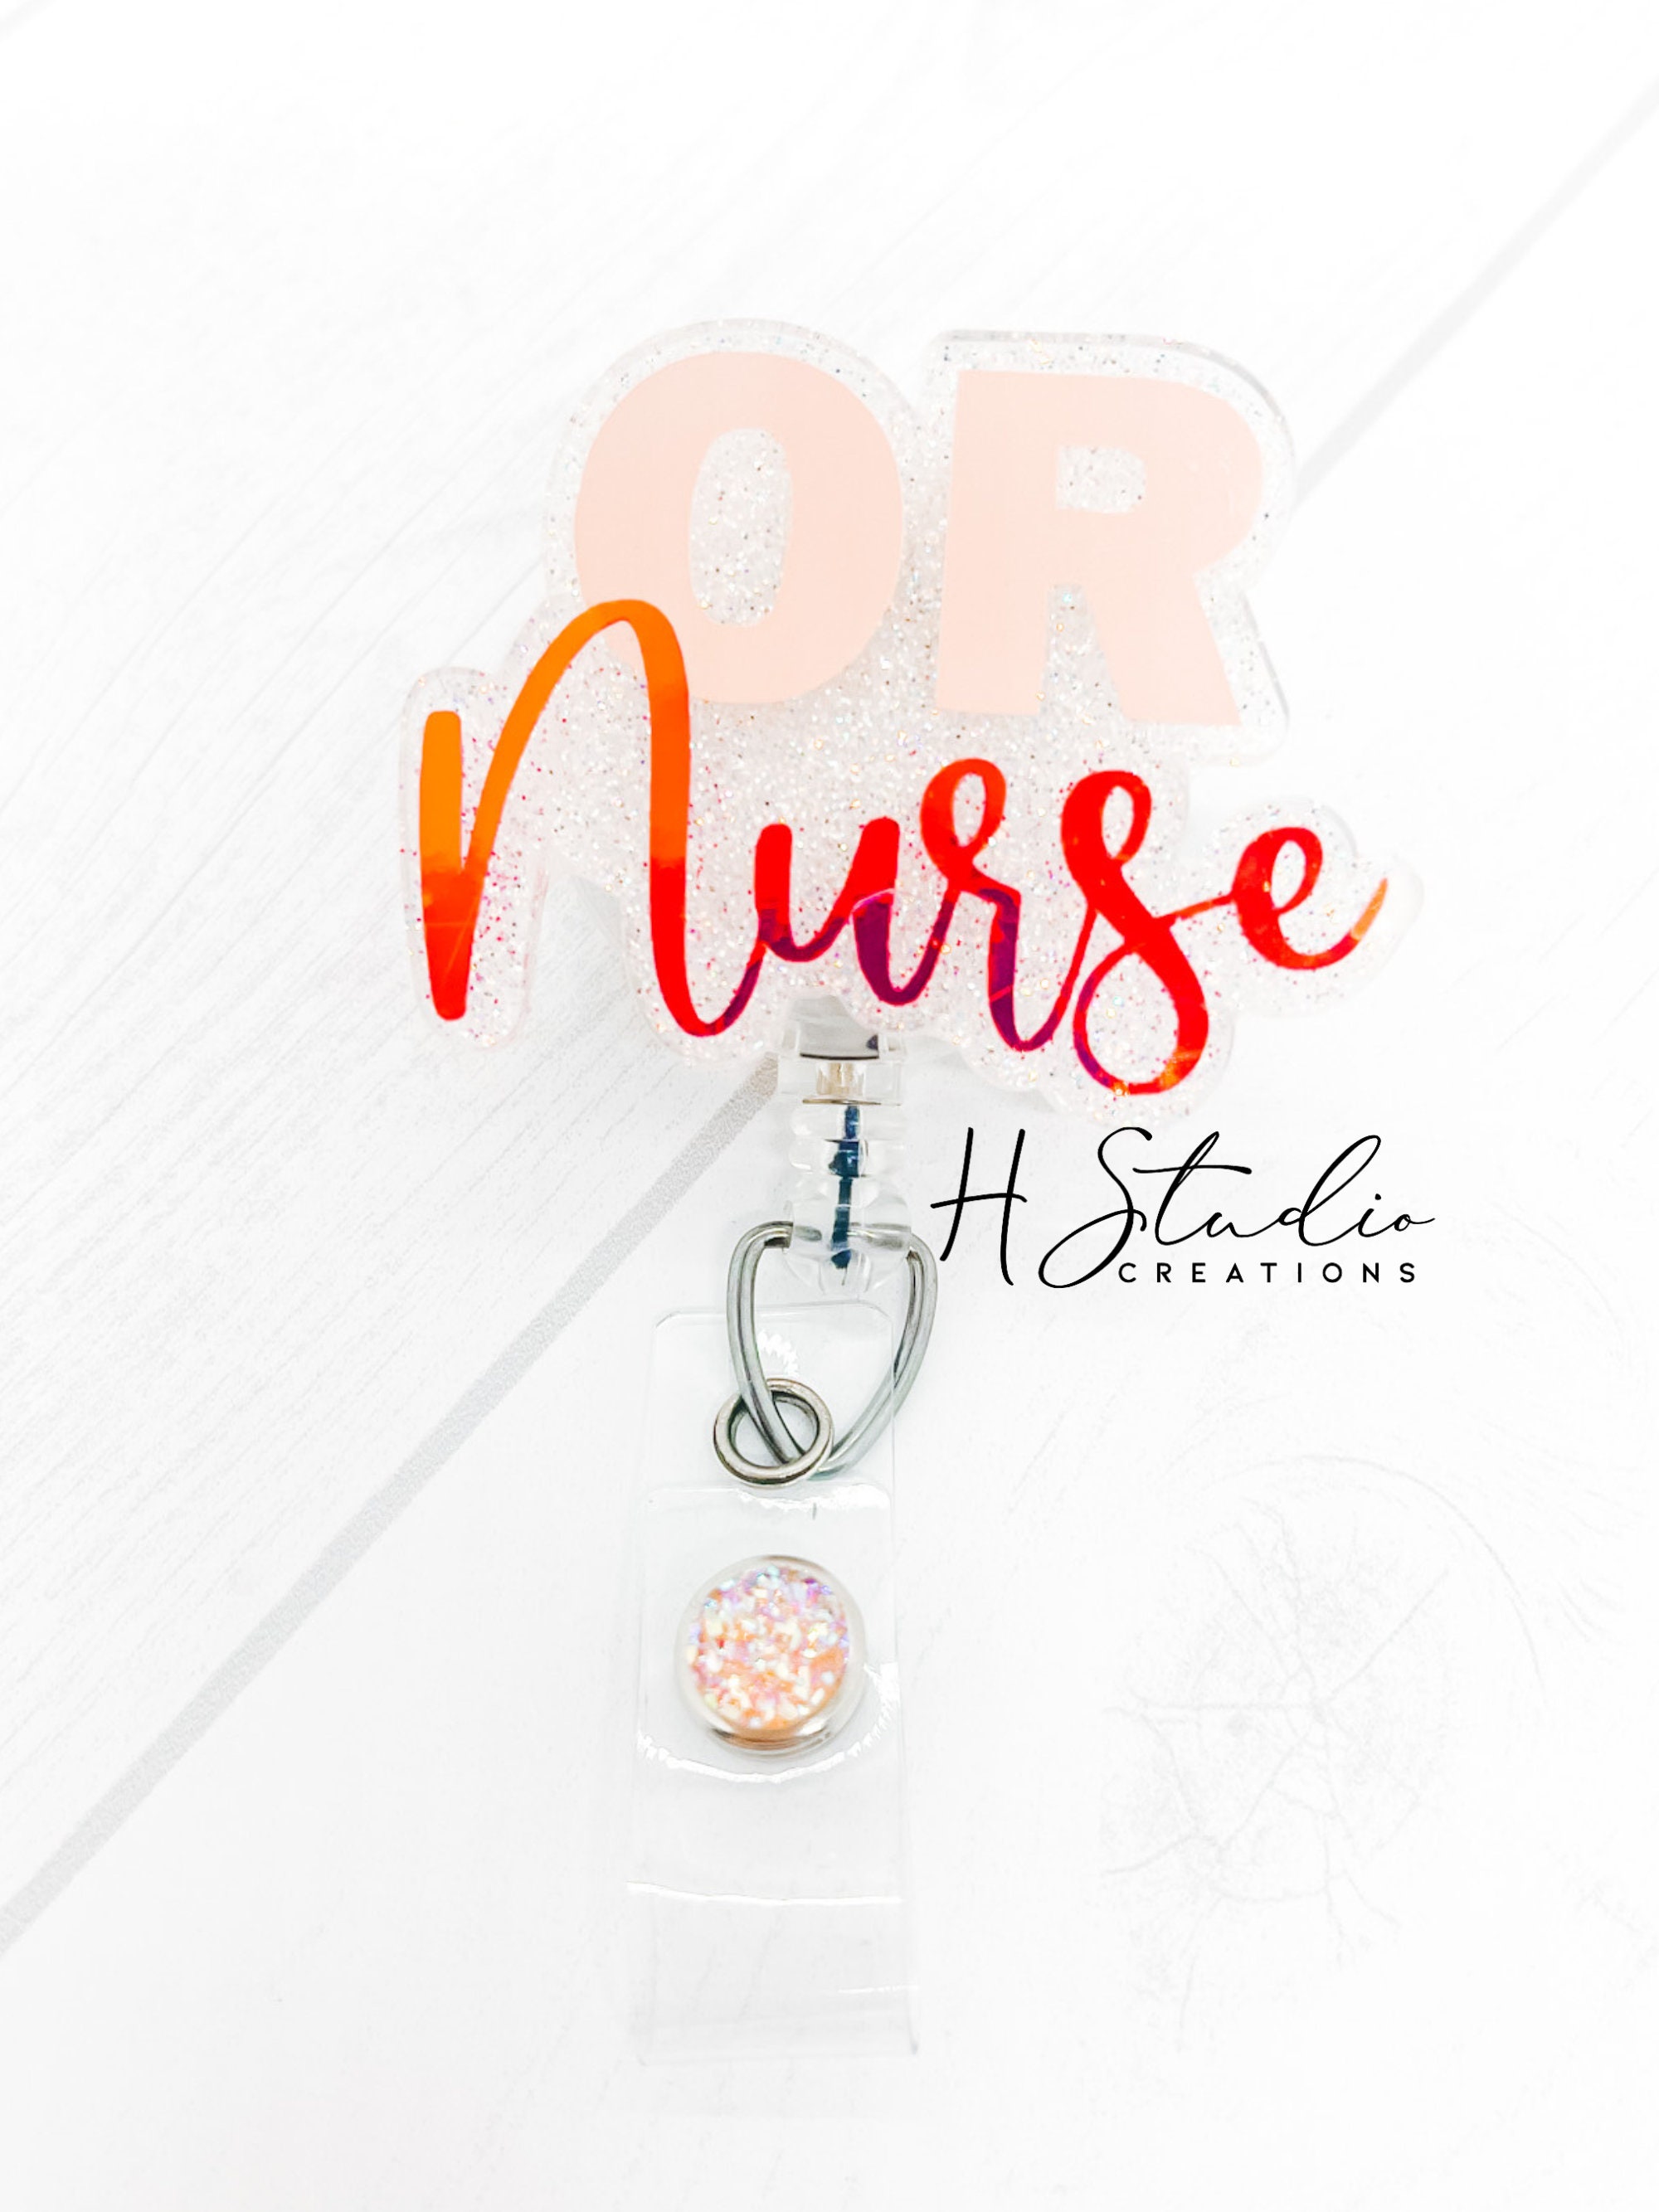 OR Nurse Badge Reel, OR Nurse Gifts, Medical Badge Reel, Nurse Badge Reel,  Graduation Gifts for Nurses, Operating Room Badge Reel, for Her 